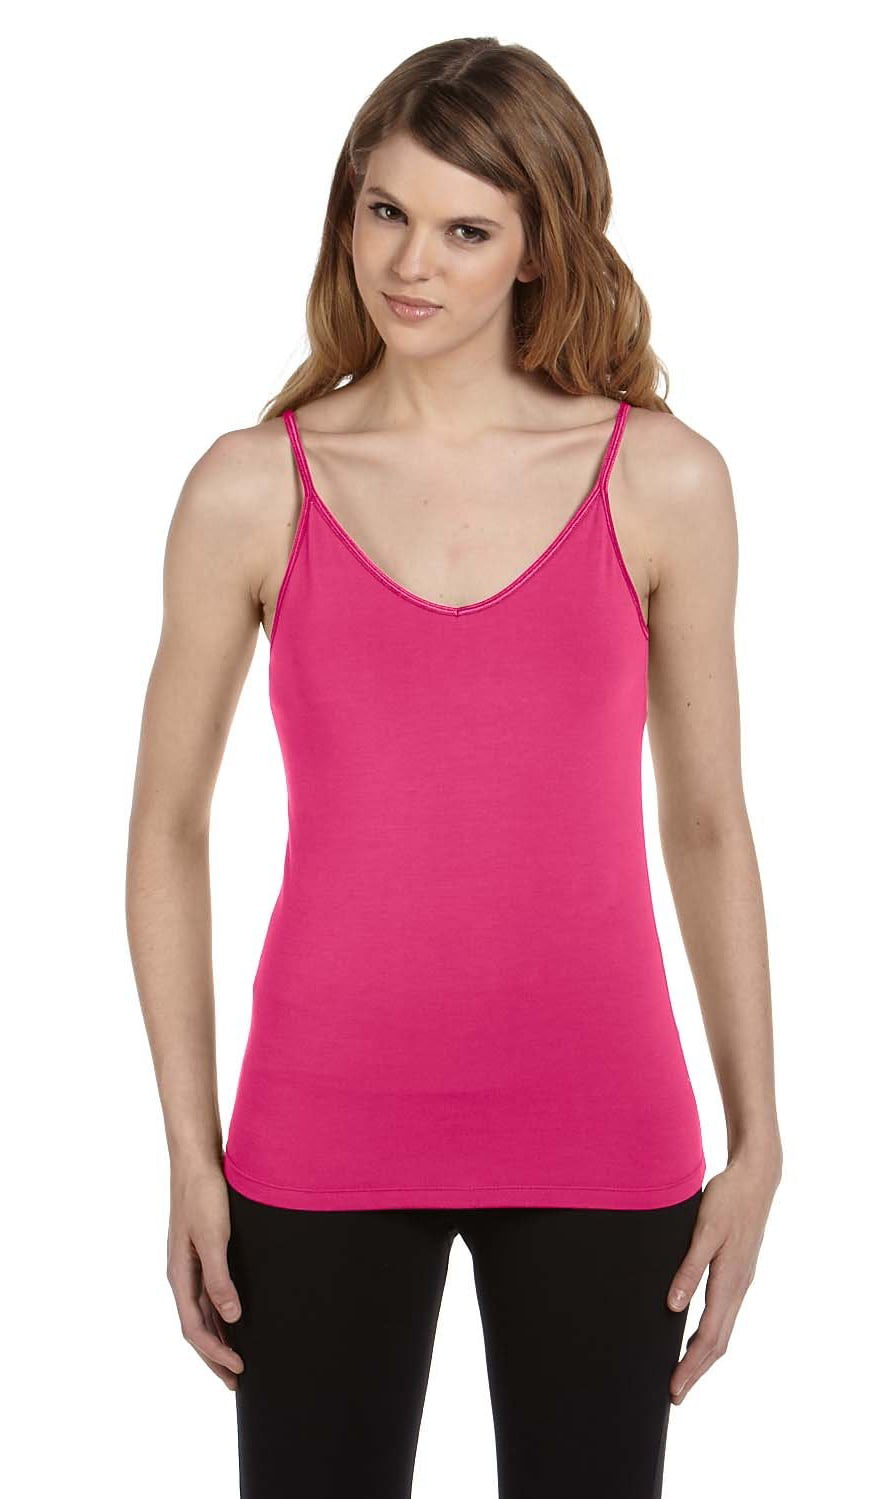 Women's Cotton/Spandex Shelf Bra Tank Top - Walmart.com